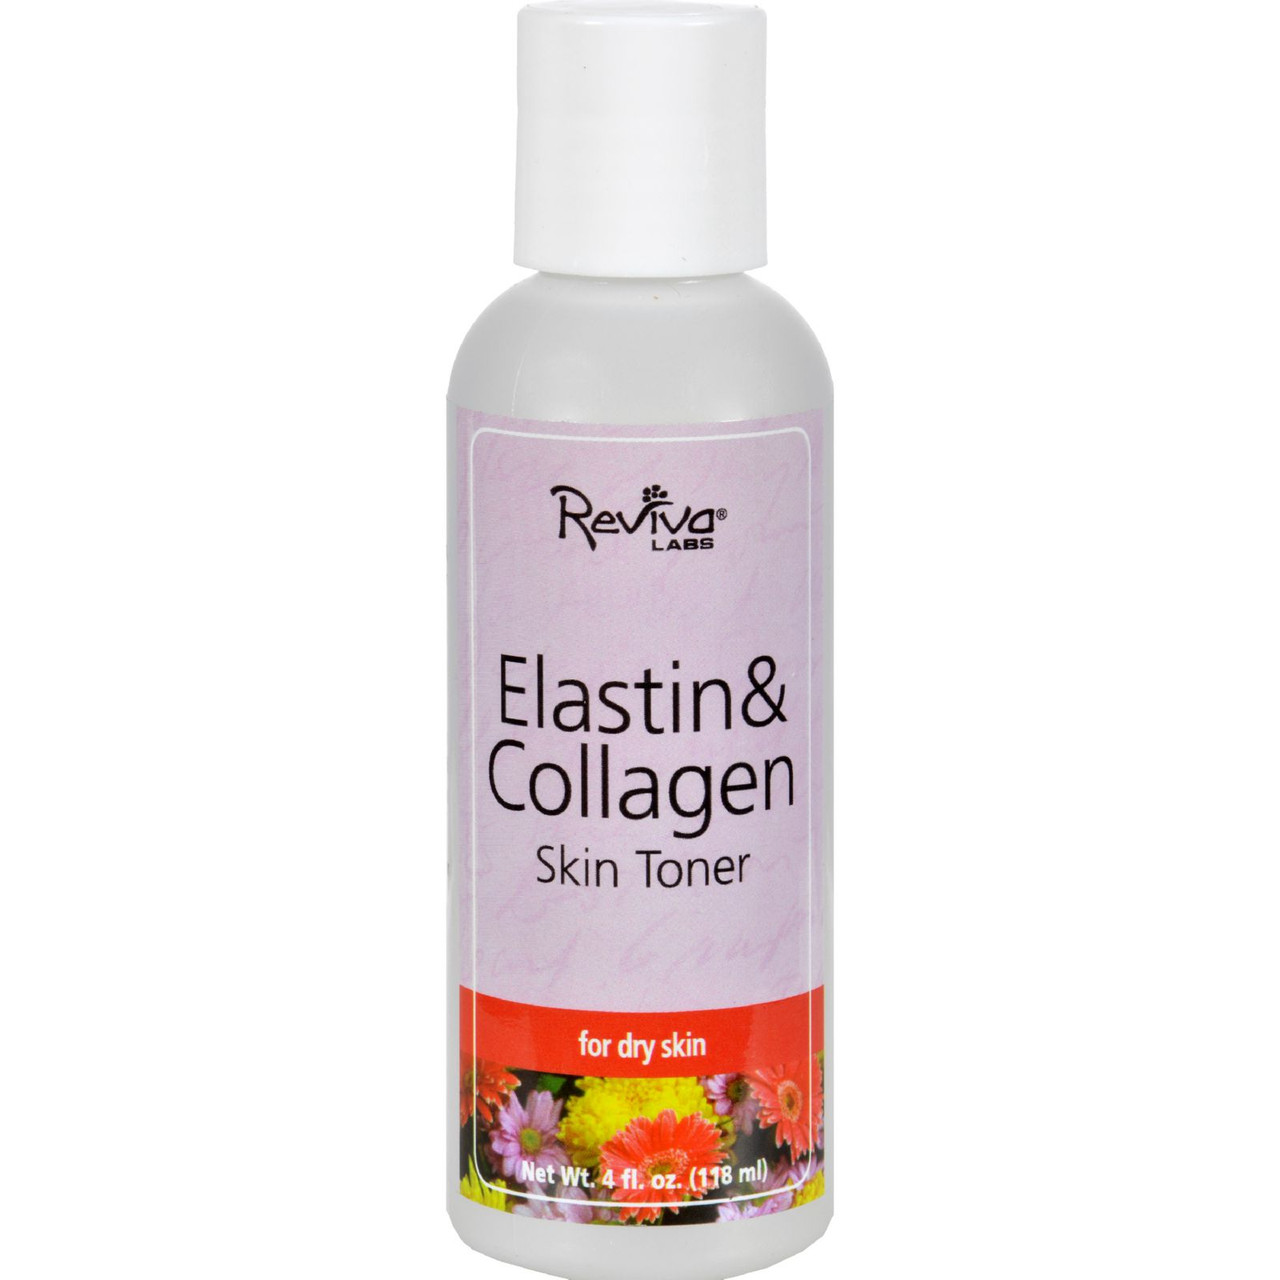 Elastin & Collagen Body Firming Lotion - Reviva Labs